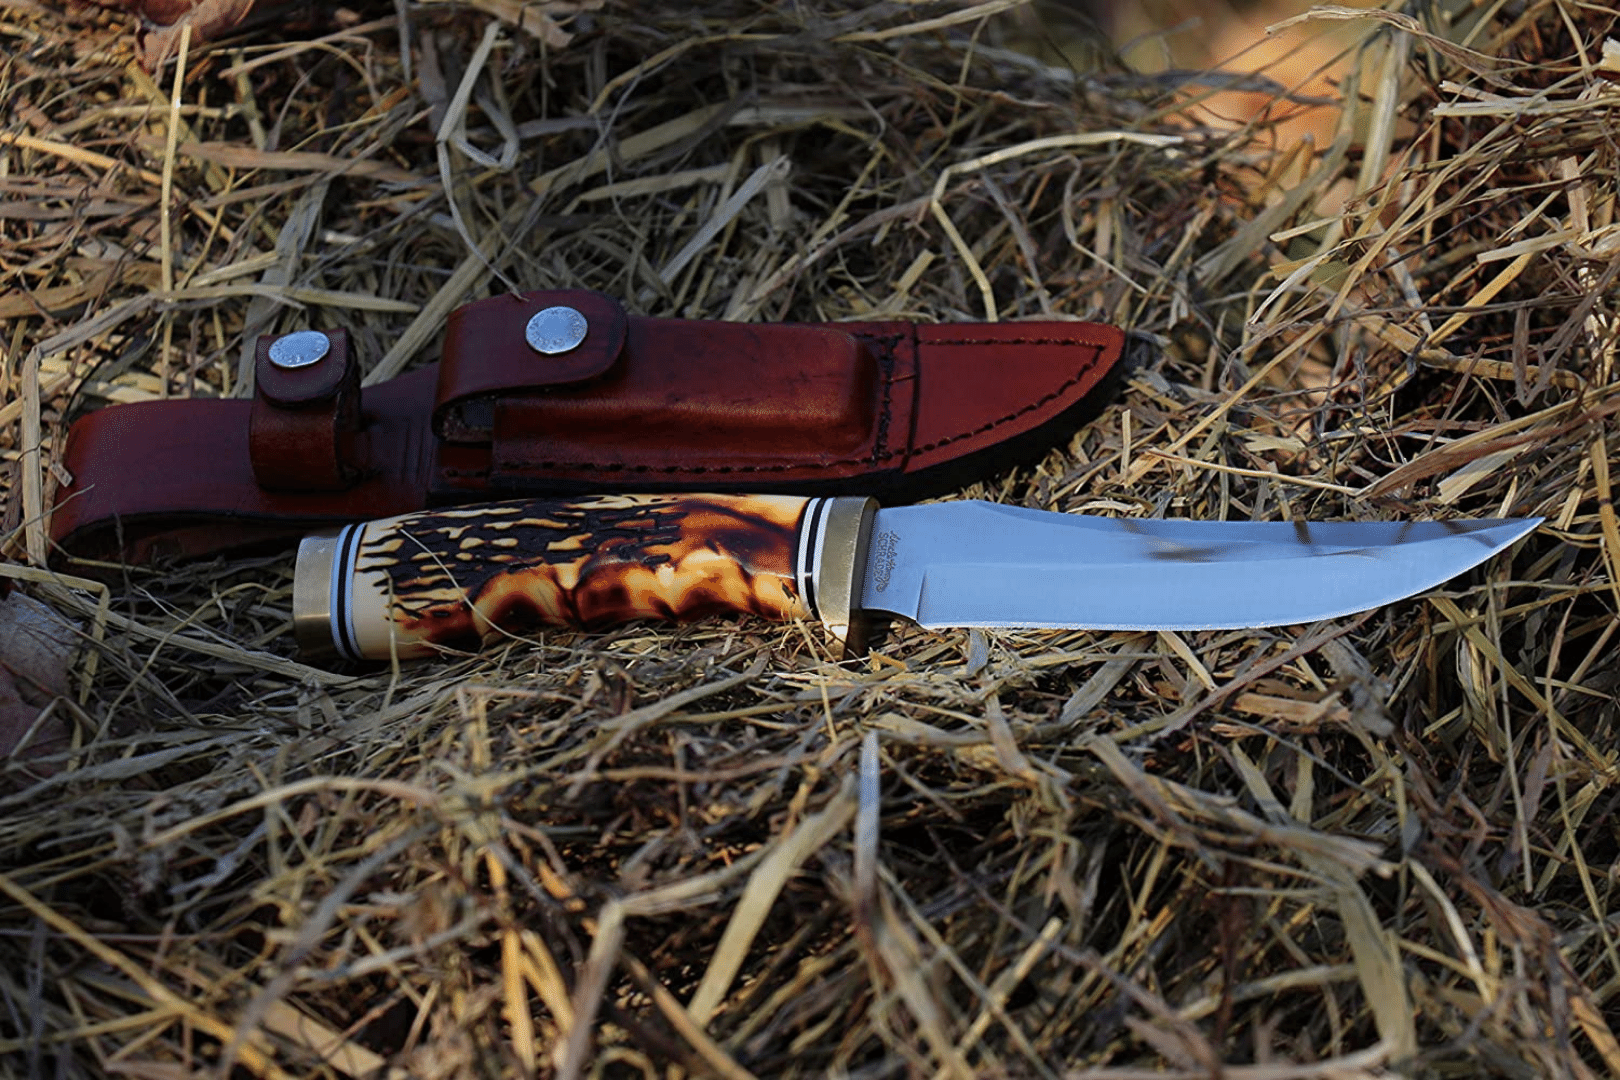 Bone handle knife and sheath with sharpening stone on hay bale